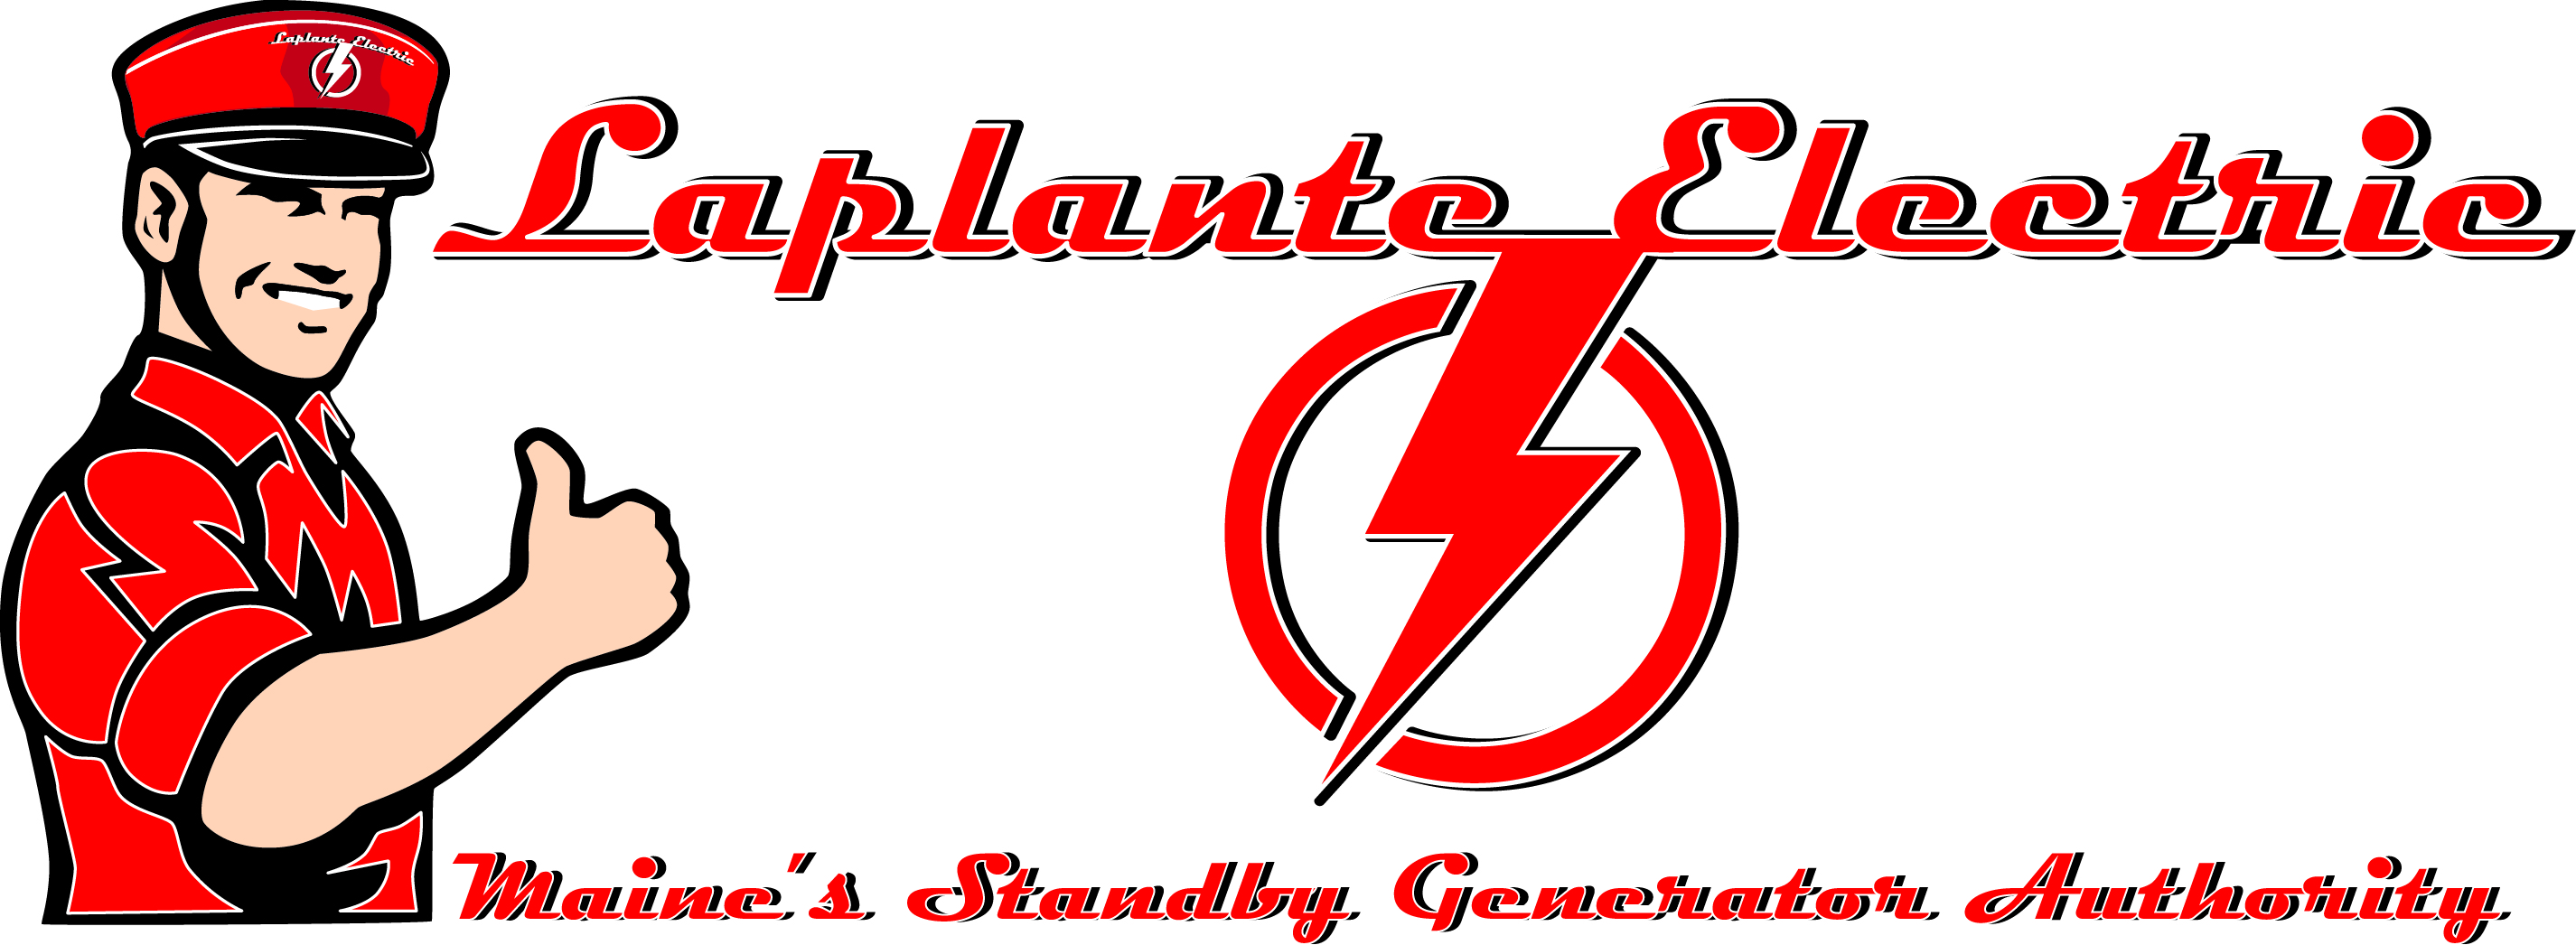 LaPlante Electric, Inc. Logo